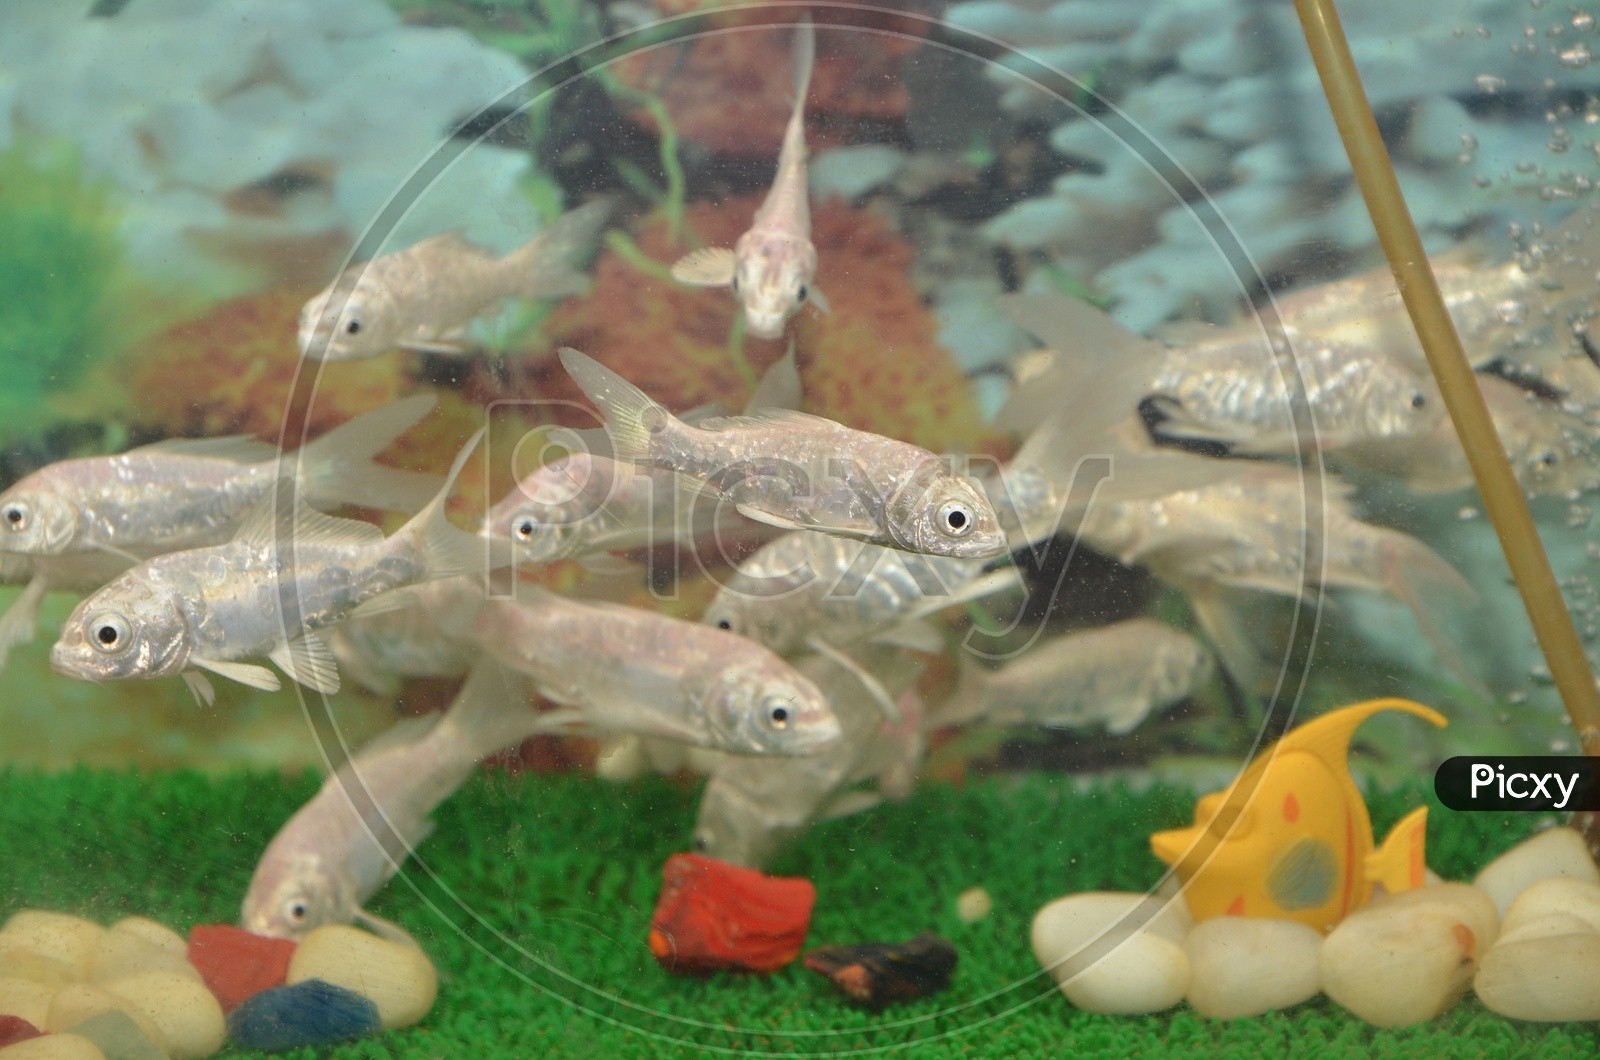 Gafftopsail catfish in the Aquarium